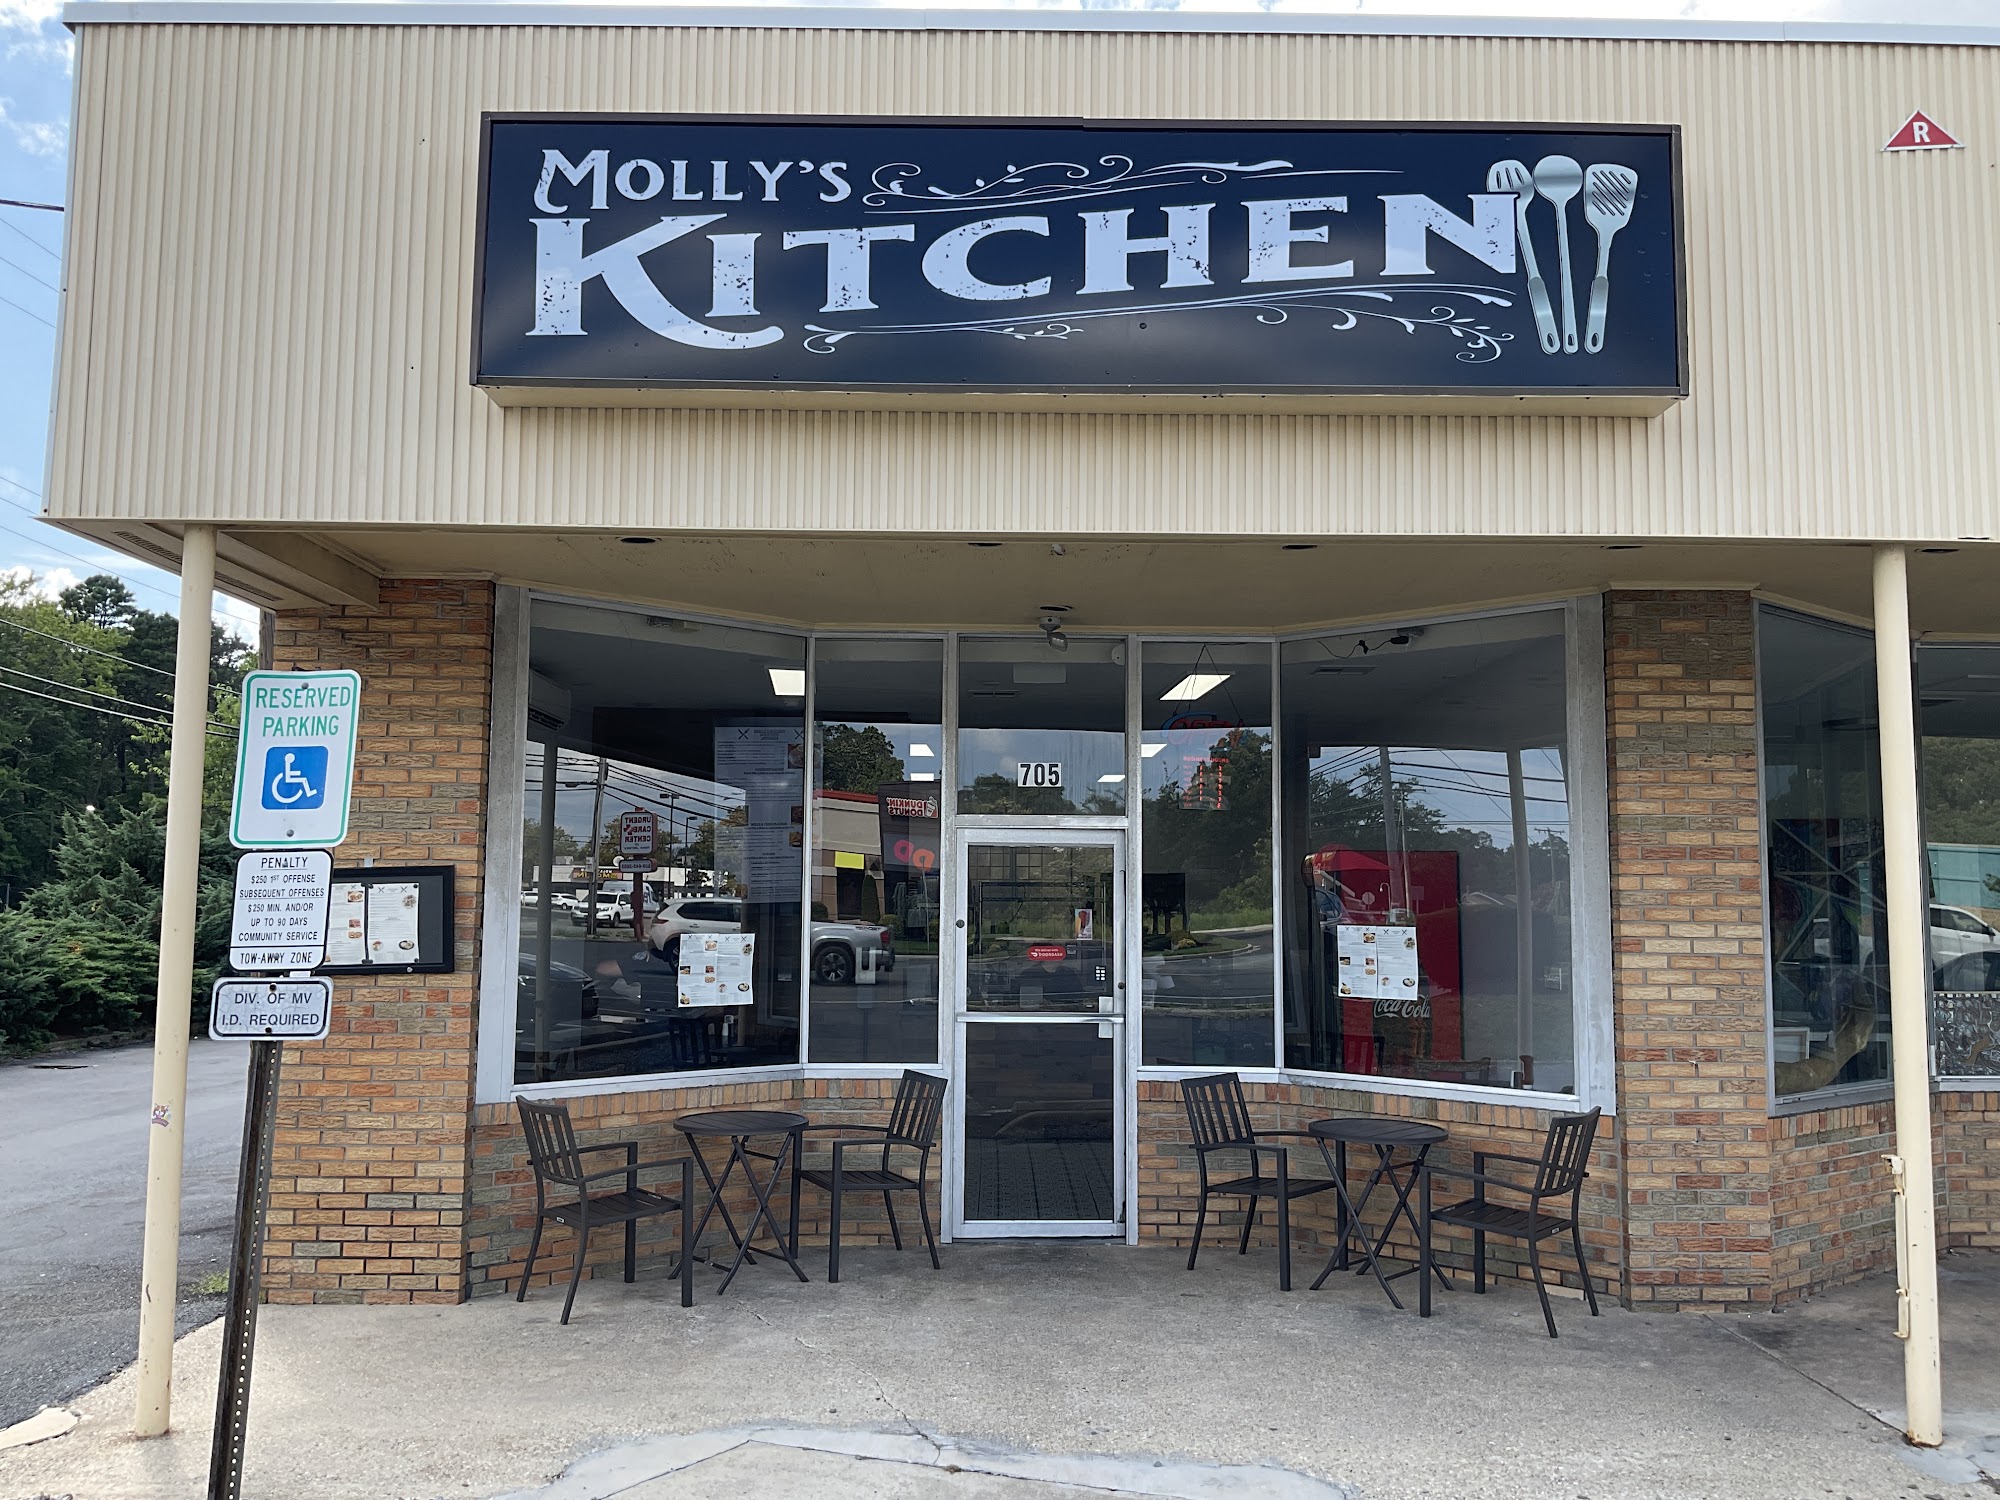 Molly's Kitchen